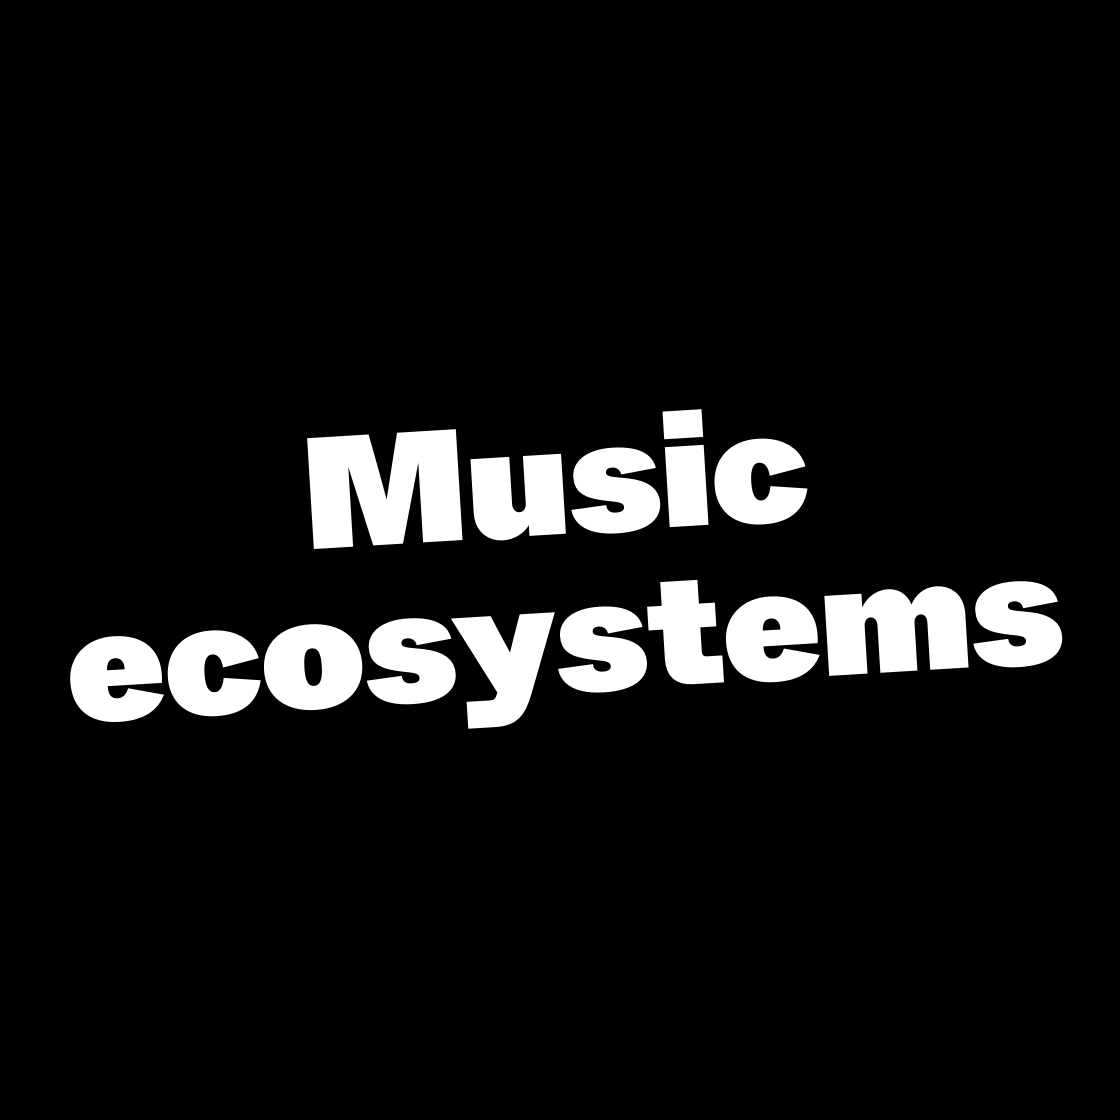 Music ecosystems